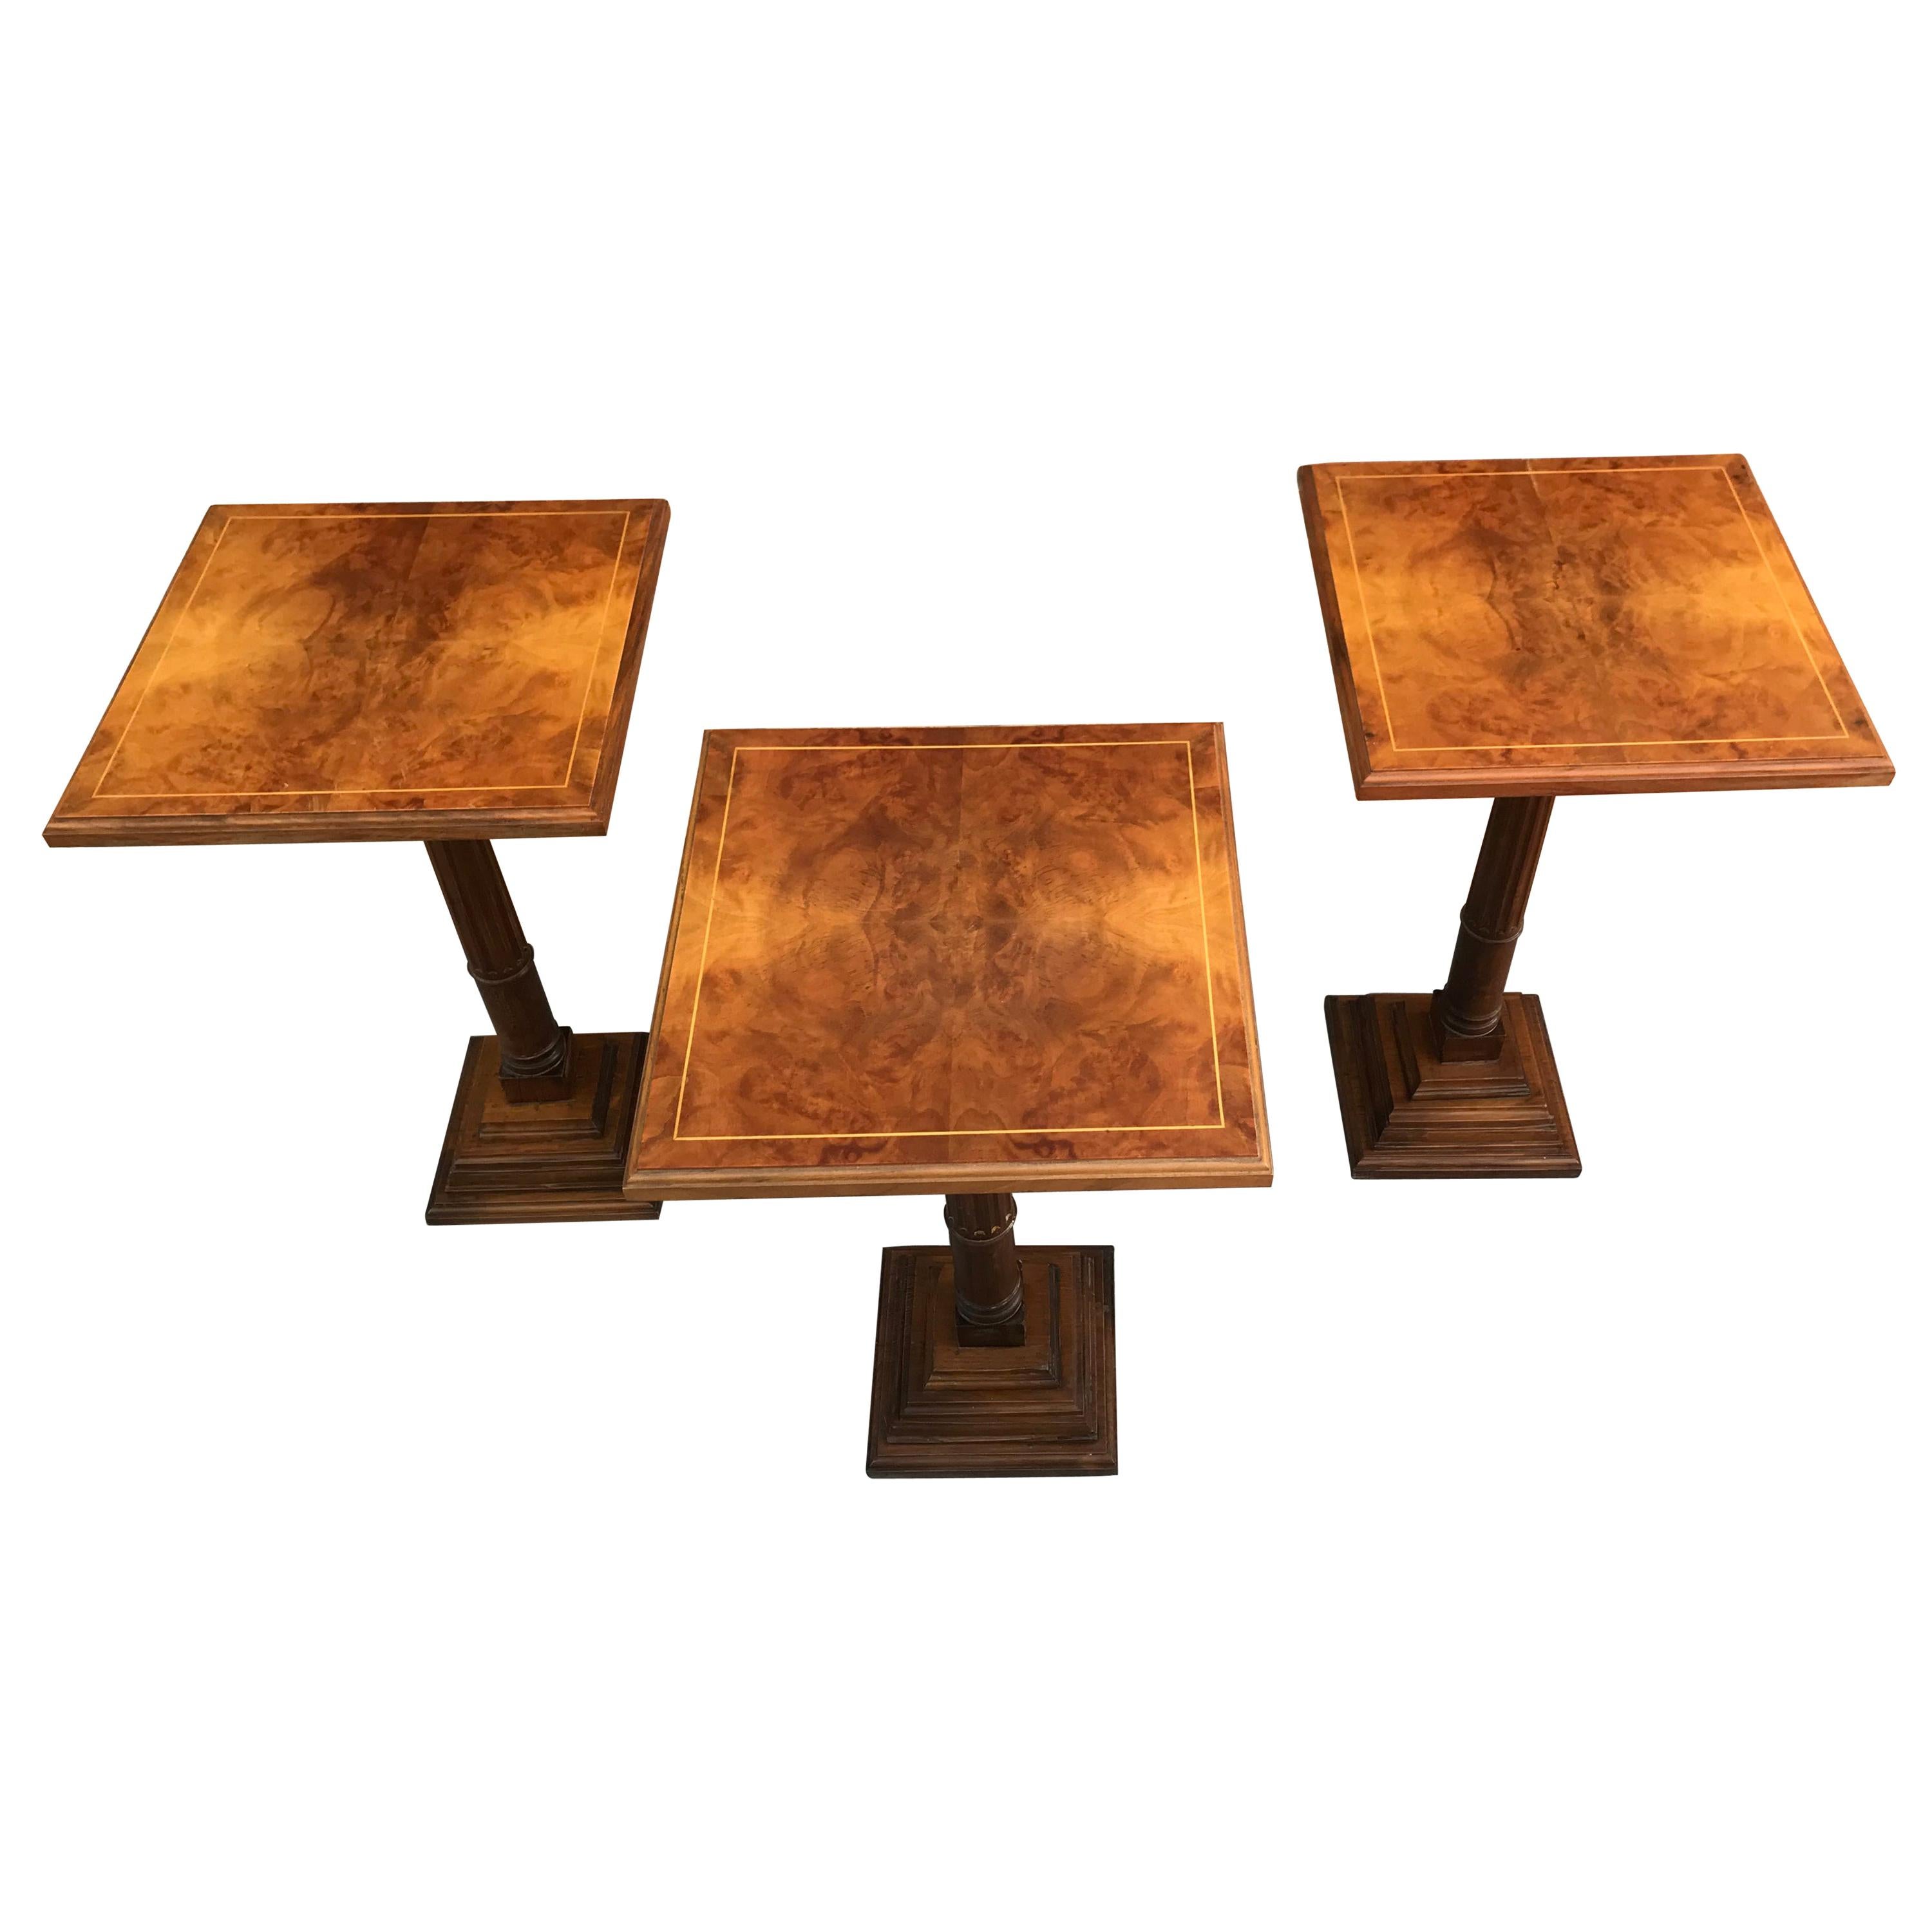 Mid-20th Century Set of Three Walnut Wood Square Top Pedestal Tables